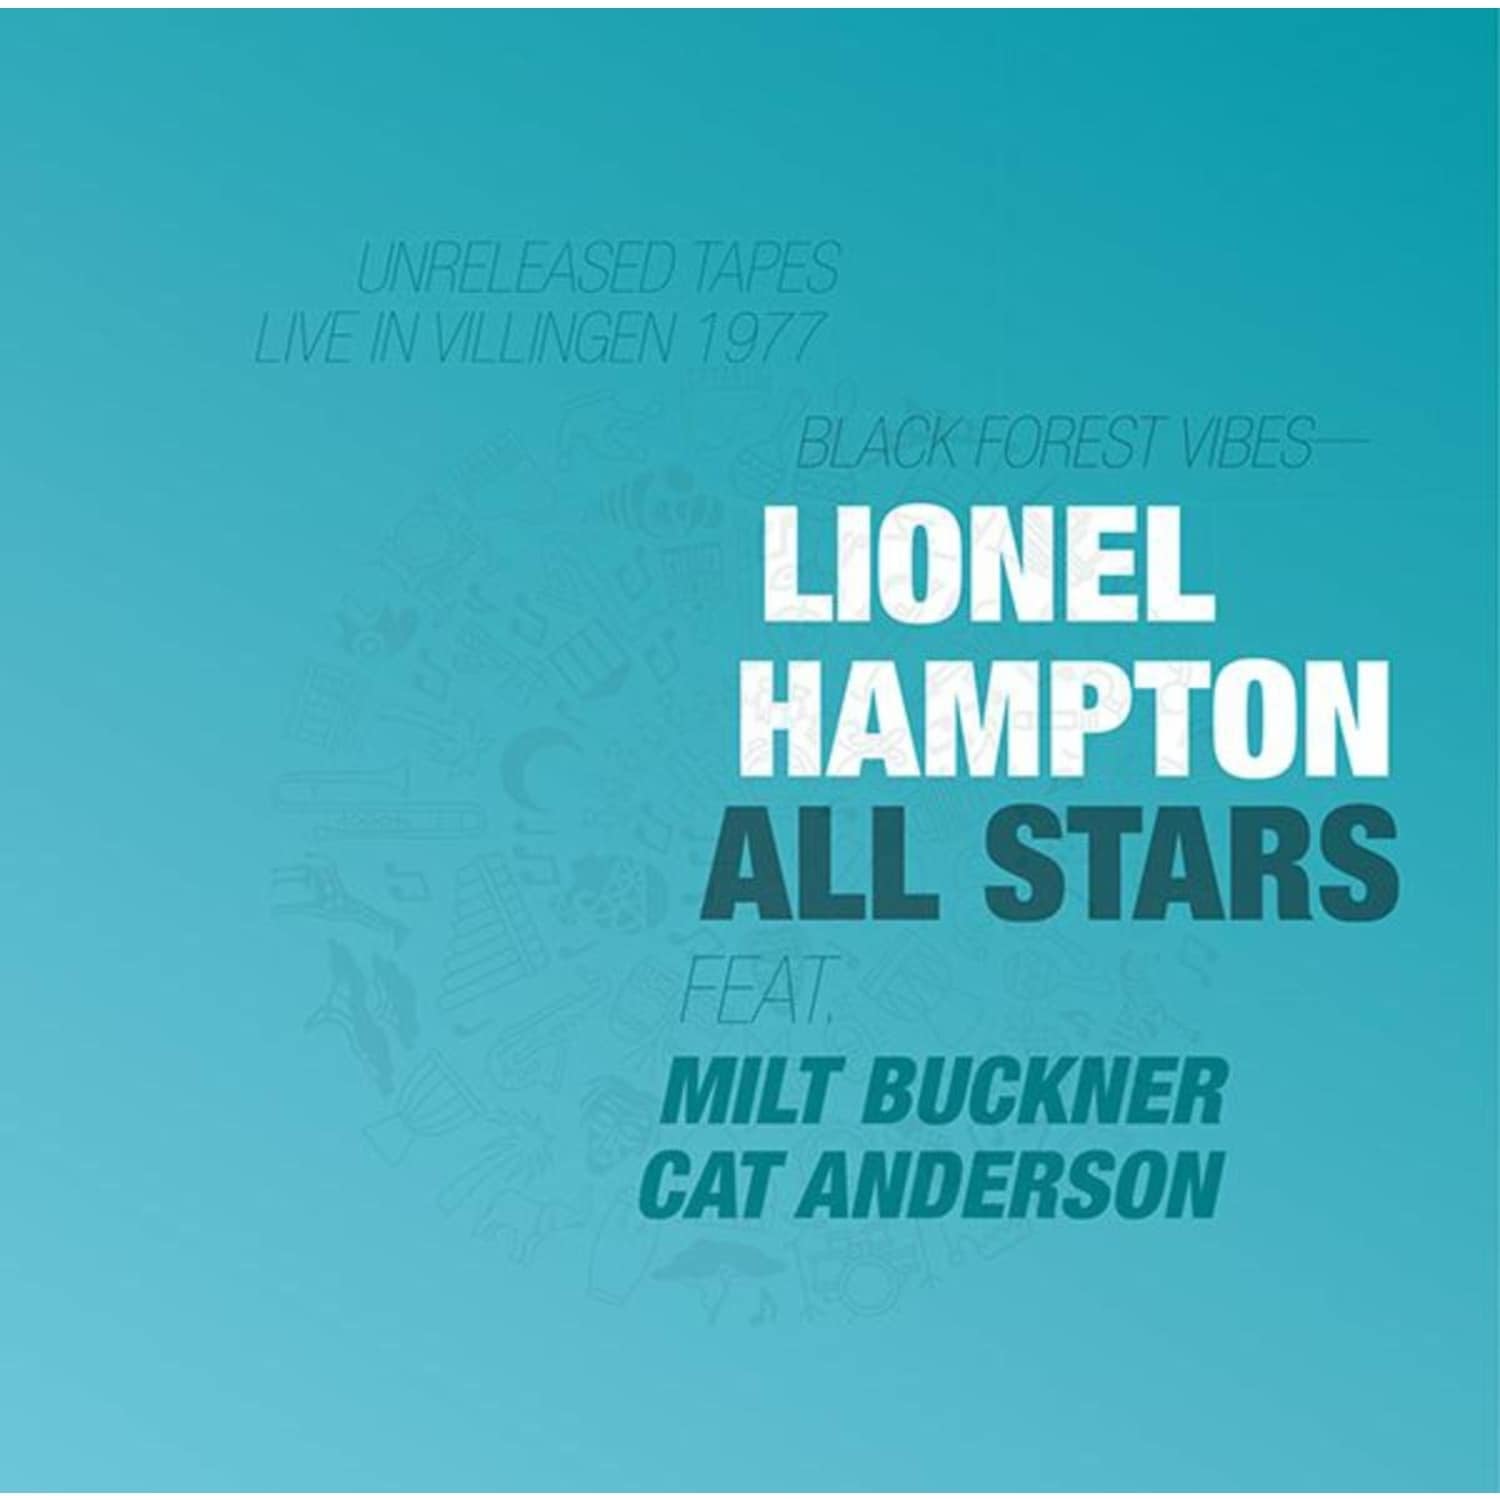 Lionel Hampton All Stars 1977  - BLACK FOREST VIBES 